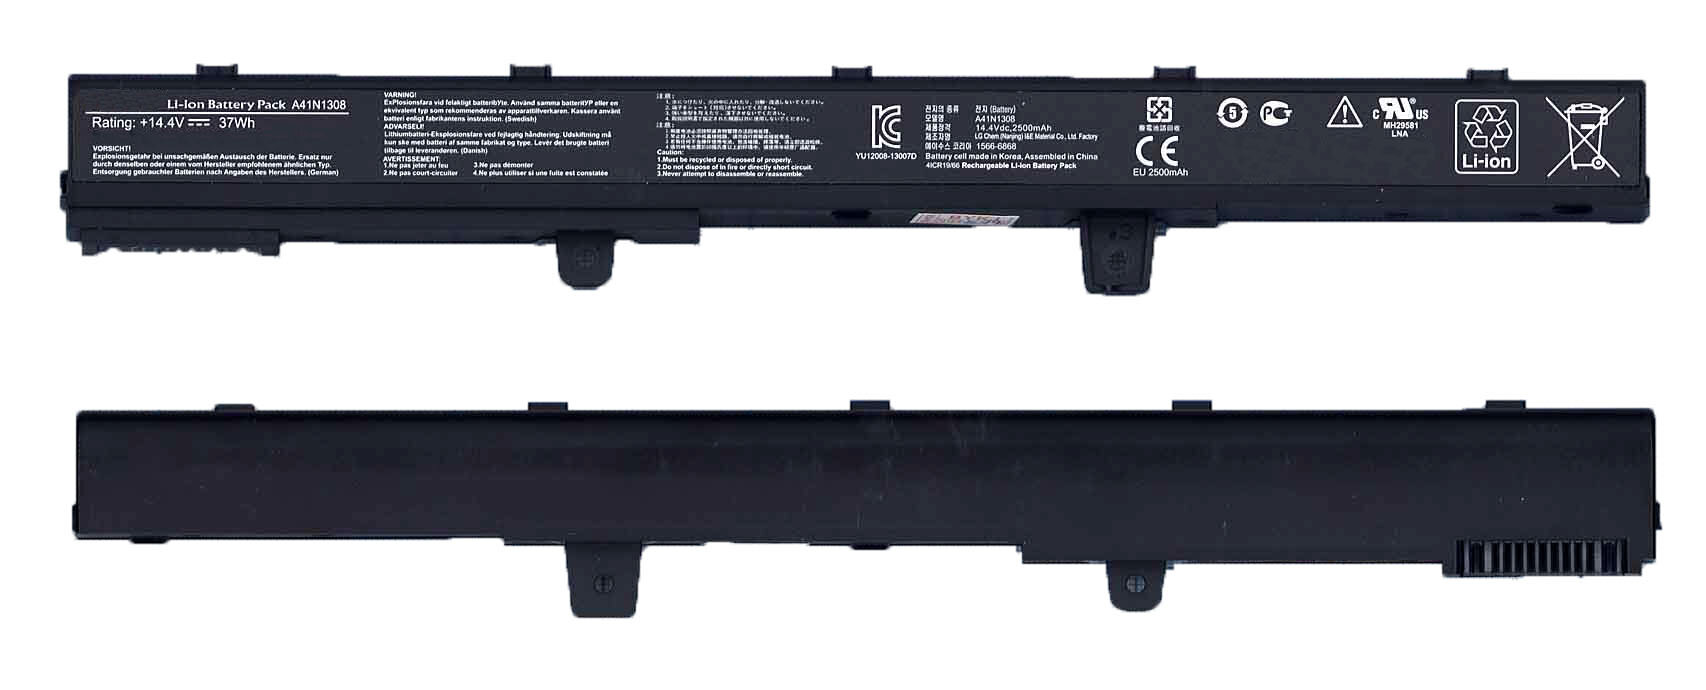 Аккумуляторная батарея для ноутбука Asus X441CA X551CA (A41N1308) 14.4V 37Wh черная